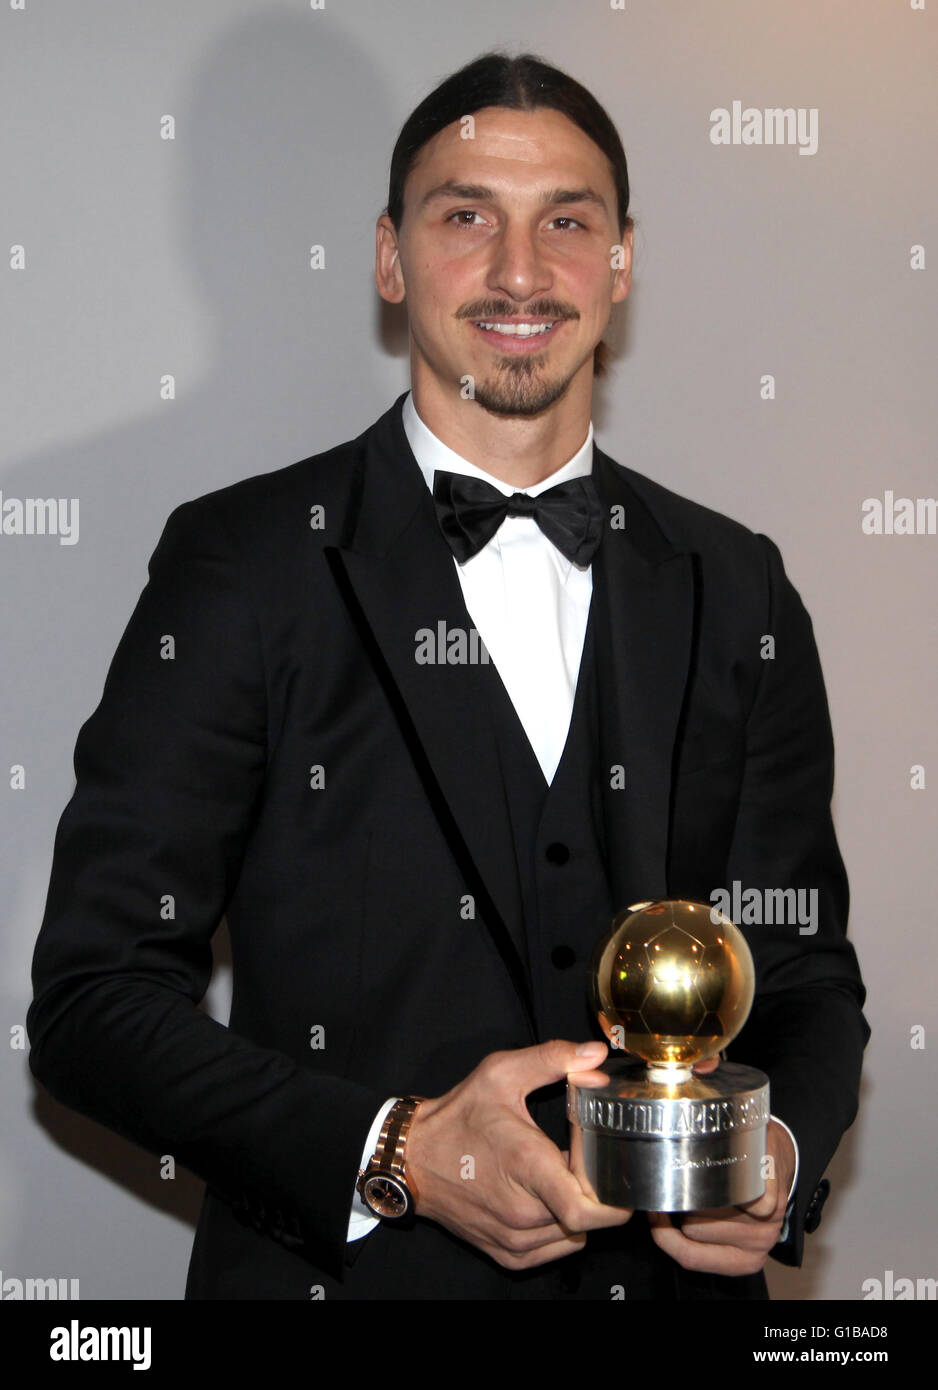 ZLATAN IBRAHIMOVIC, jugador de fútbol profesional sueco Foto de stock